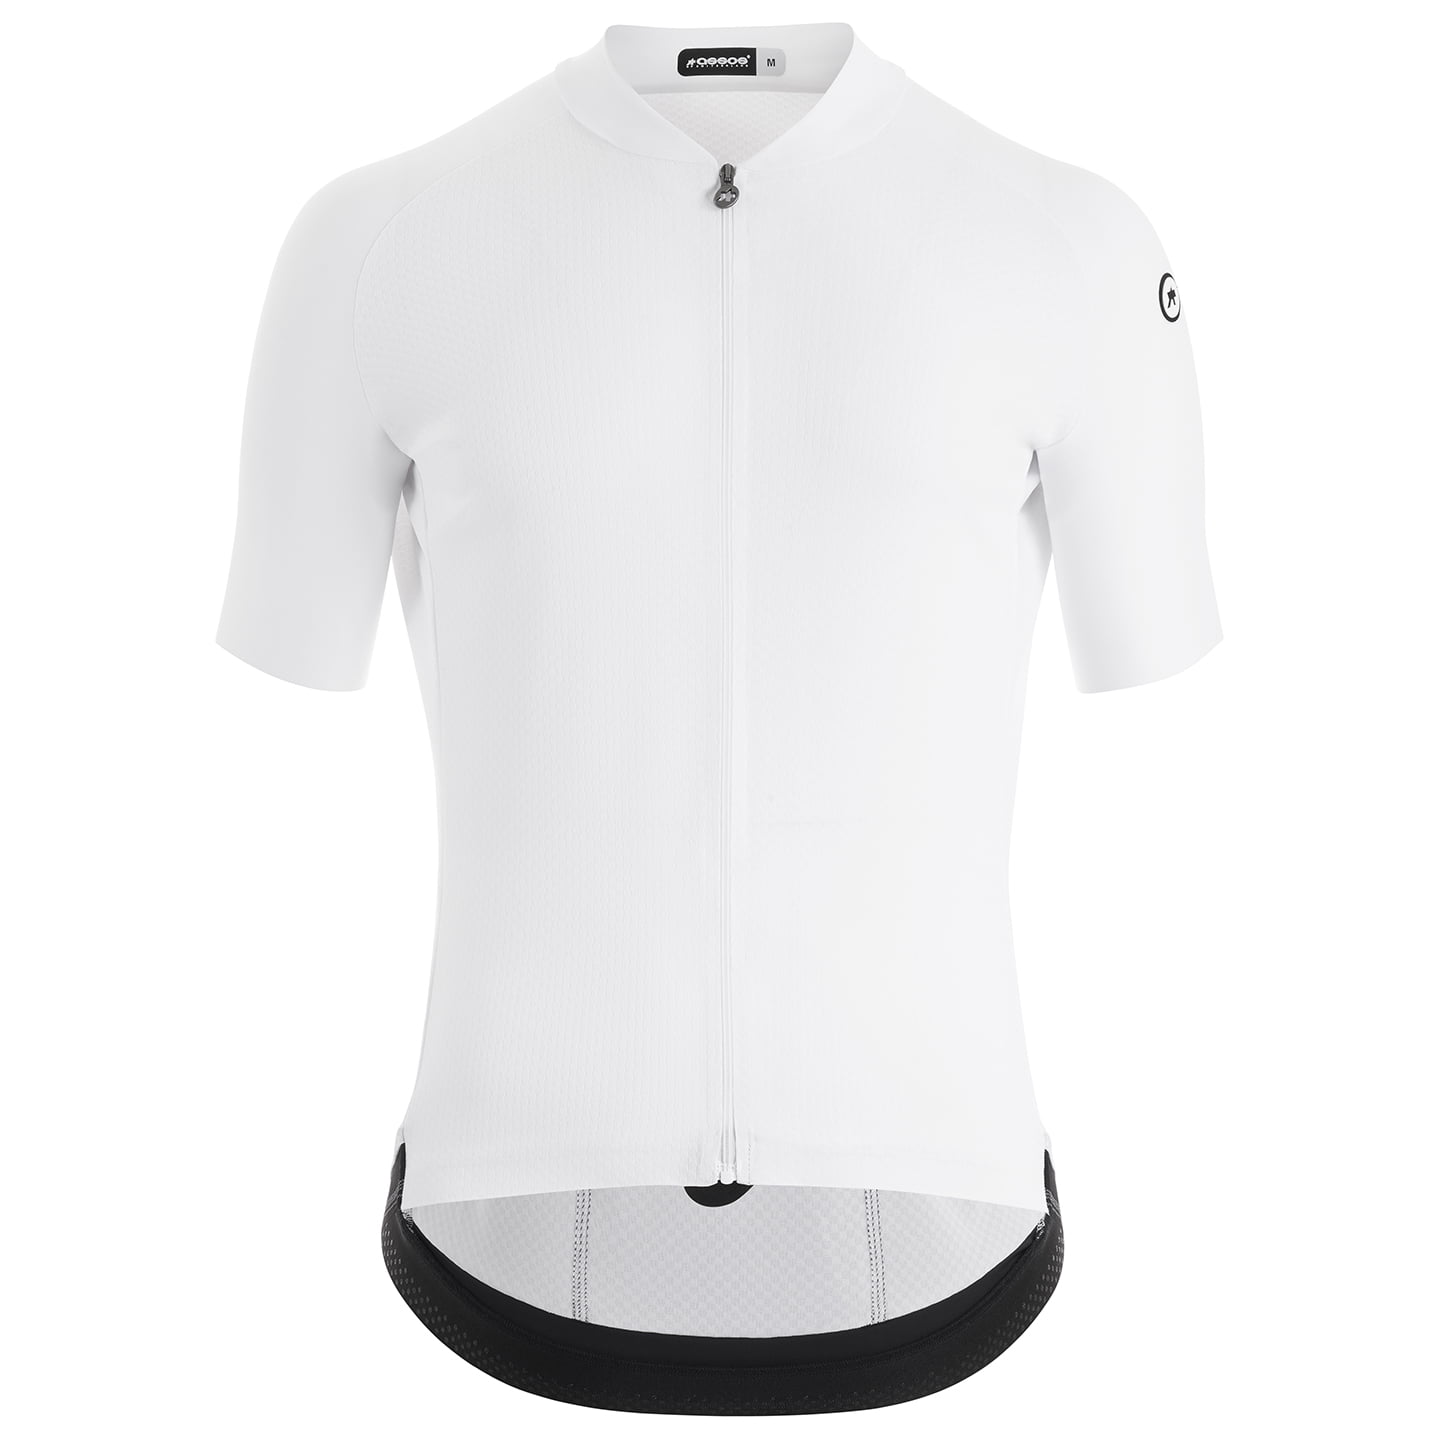 ASSOS Mille GT C2 EVO Short Sleeve Jersey Short Sleeve Jersey, for men, size S, Cycling jersey, Cycling clothing